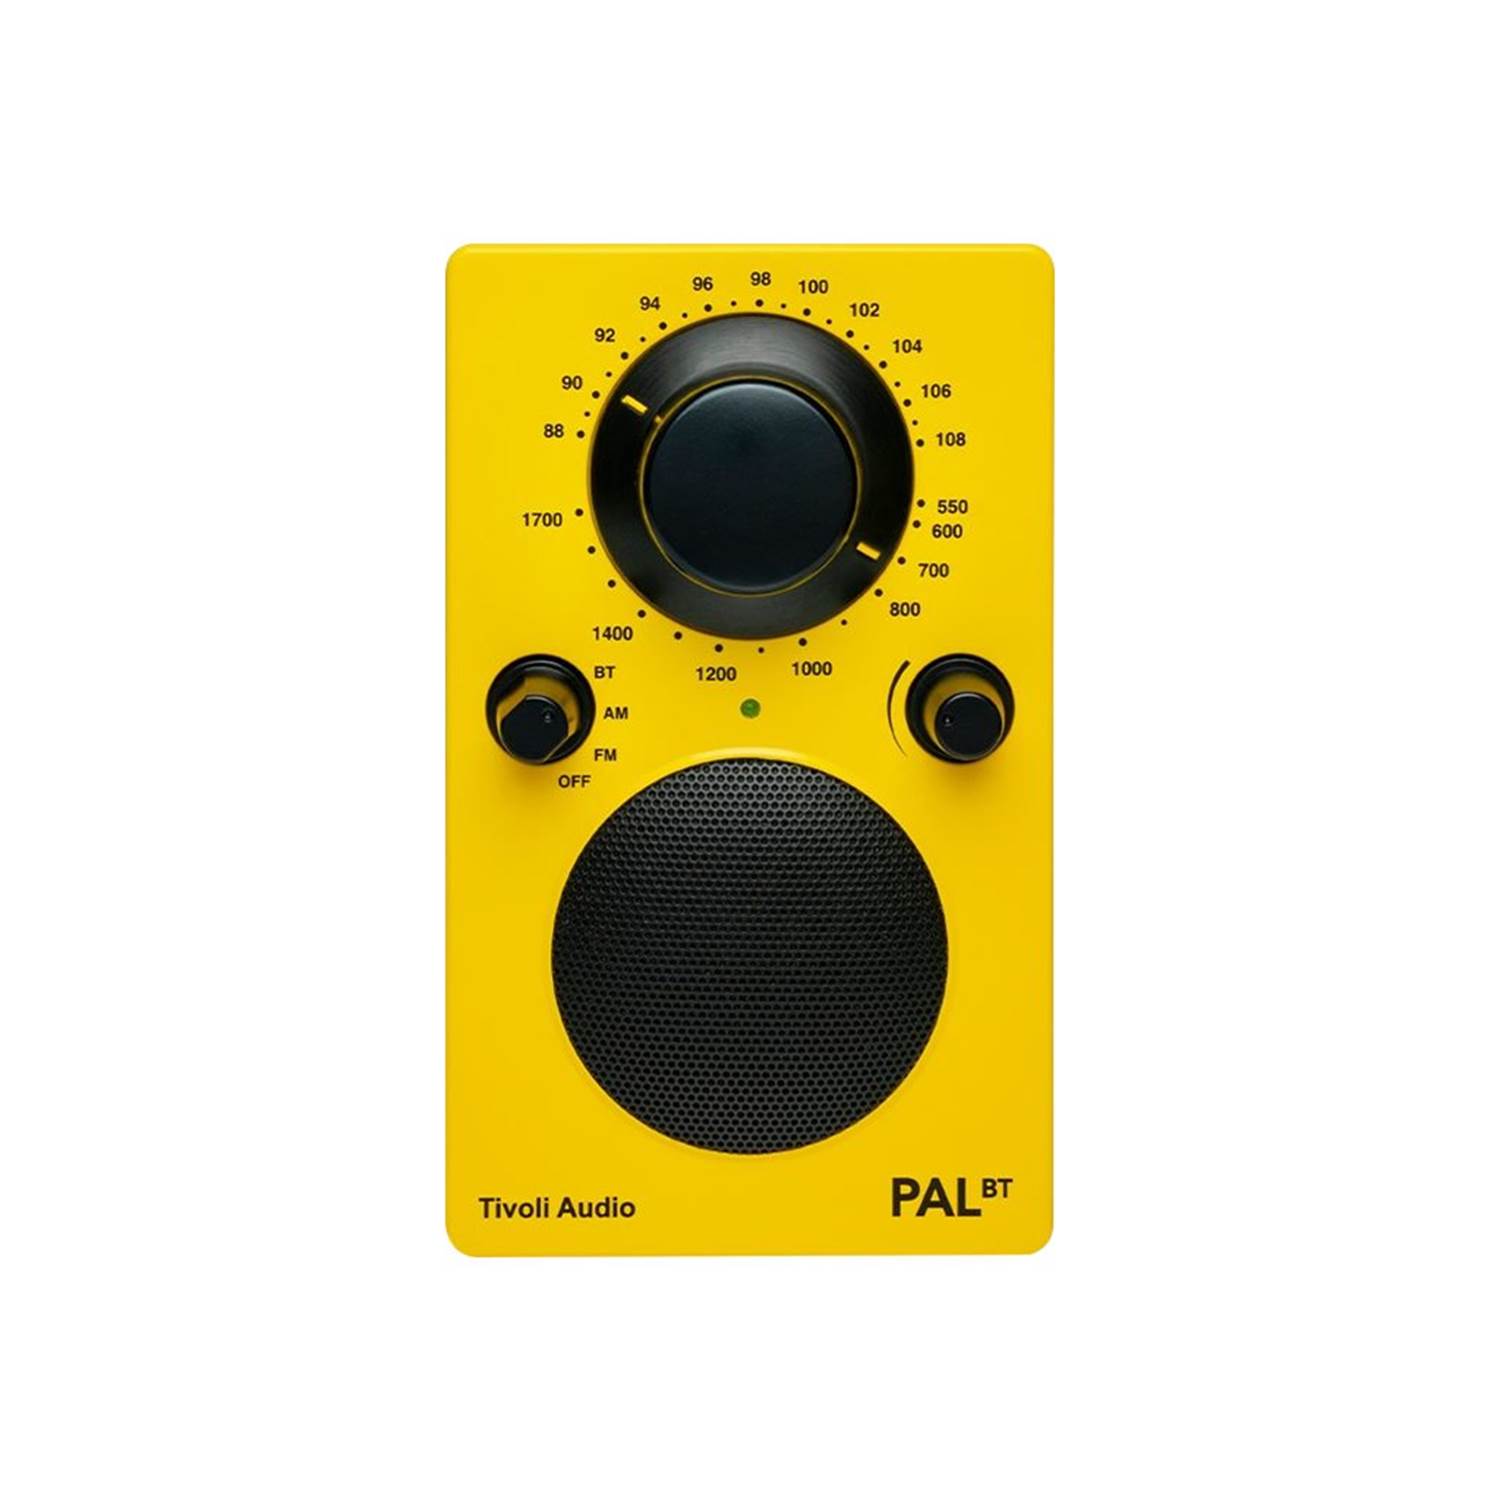 Tivoli Audio Pal BT – Yellow